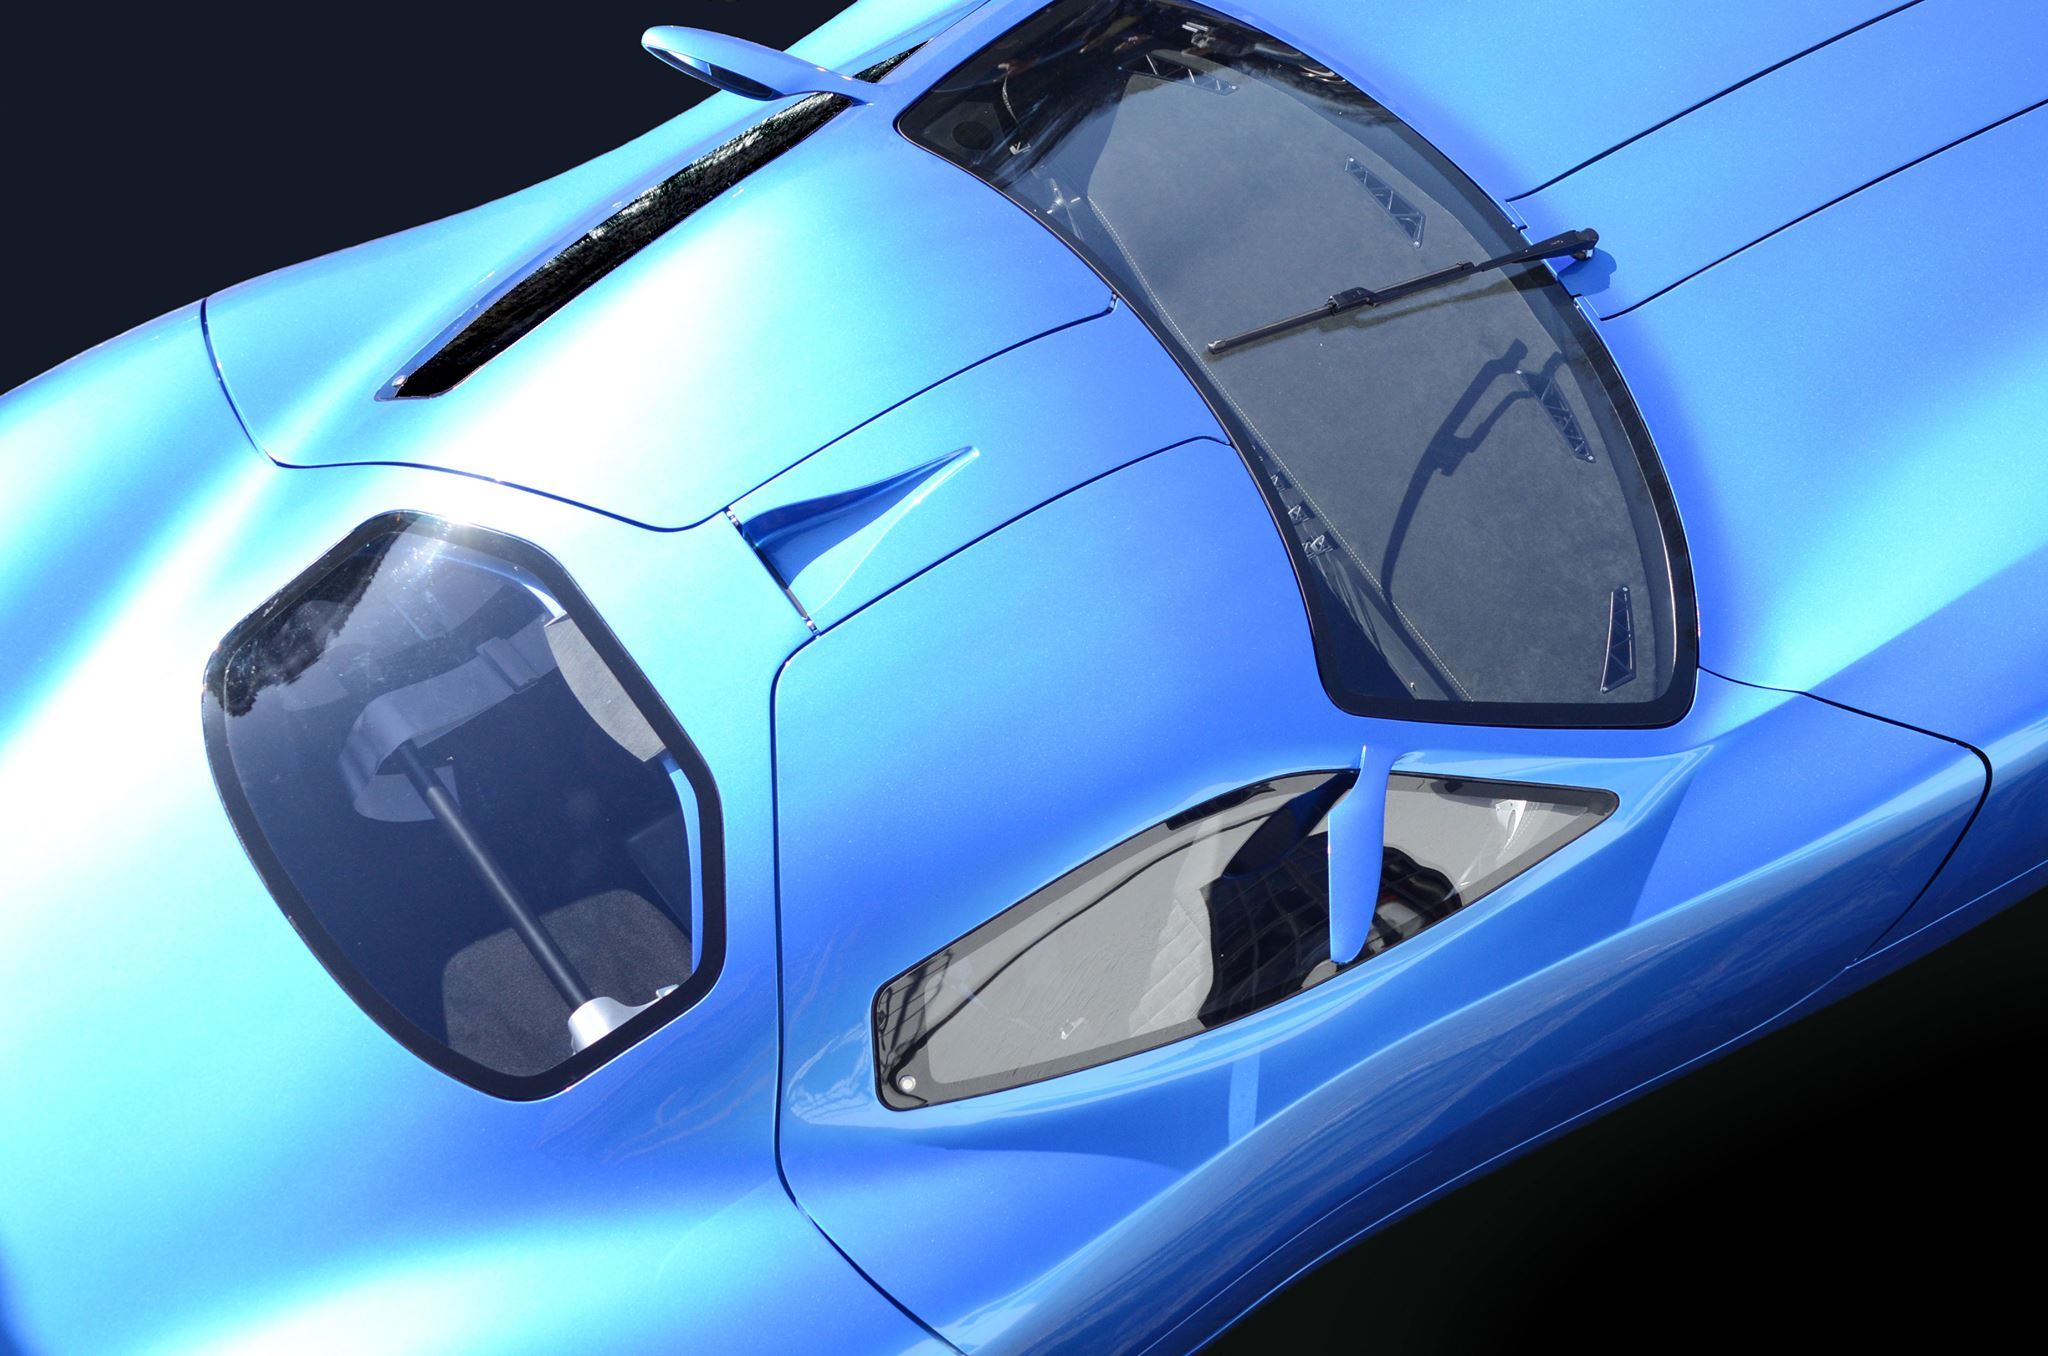 Toroidion 1MW Concept (2015): Finnish electric supercar